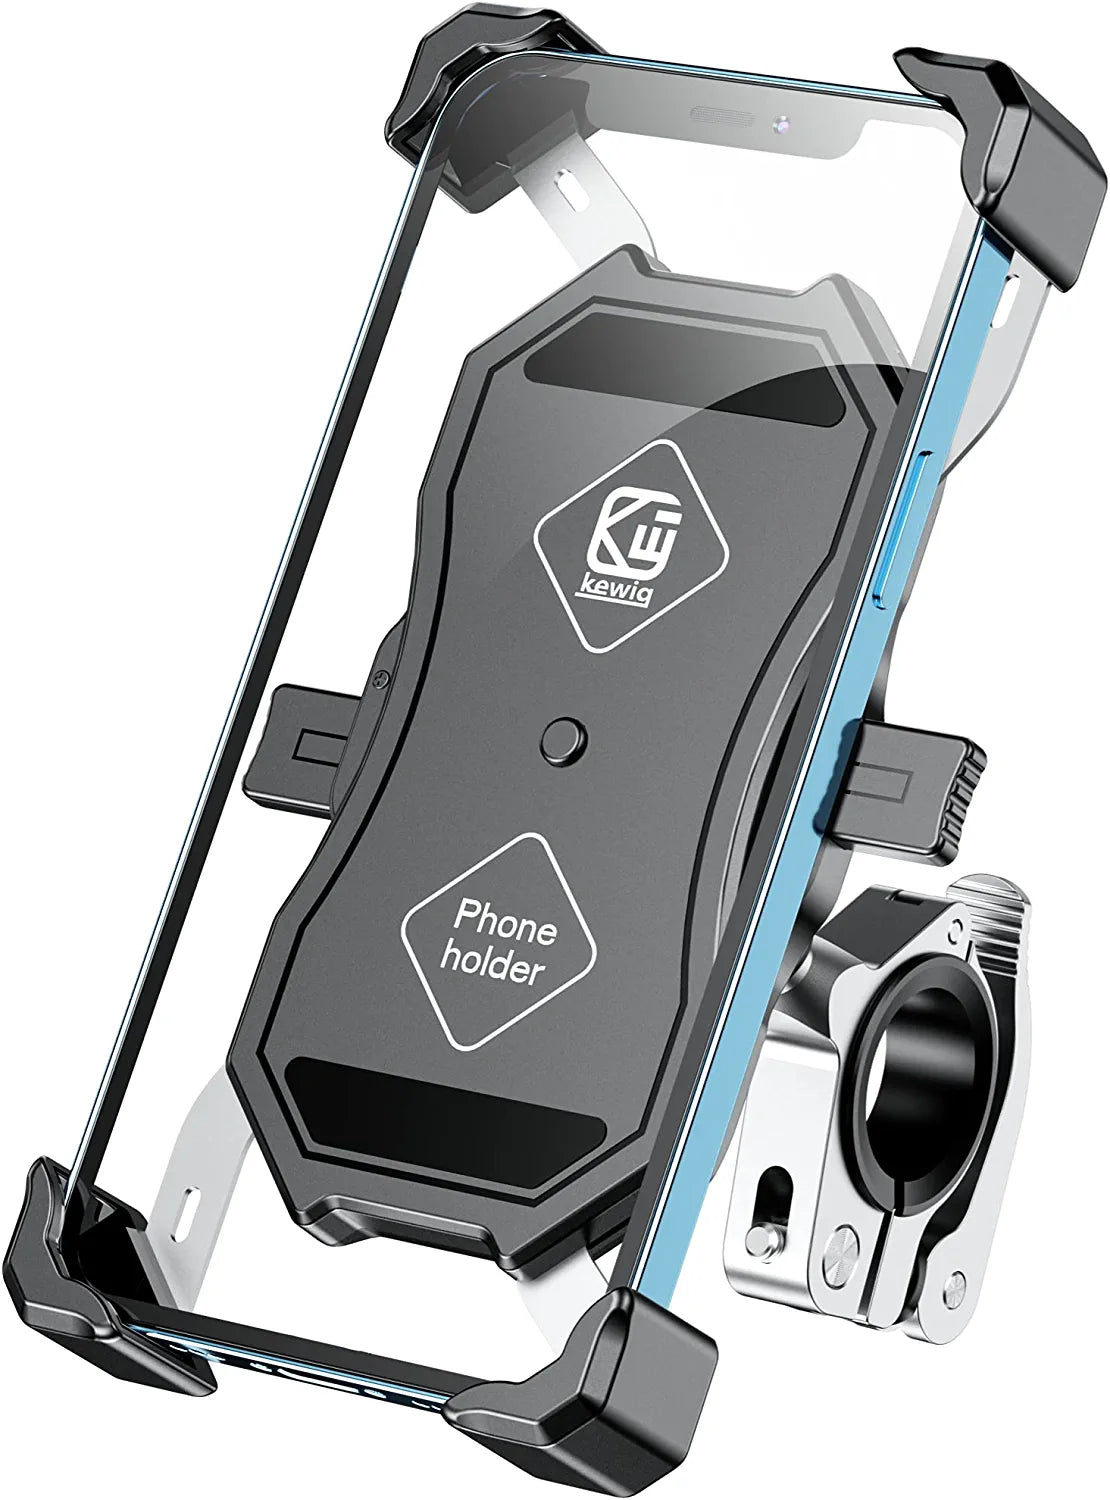 eller santé ® Phone Mount, One-Touch Release Bike Phone Holder